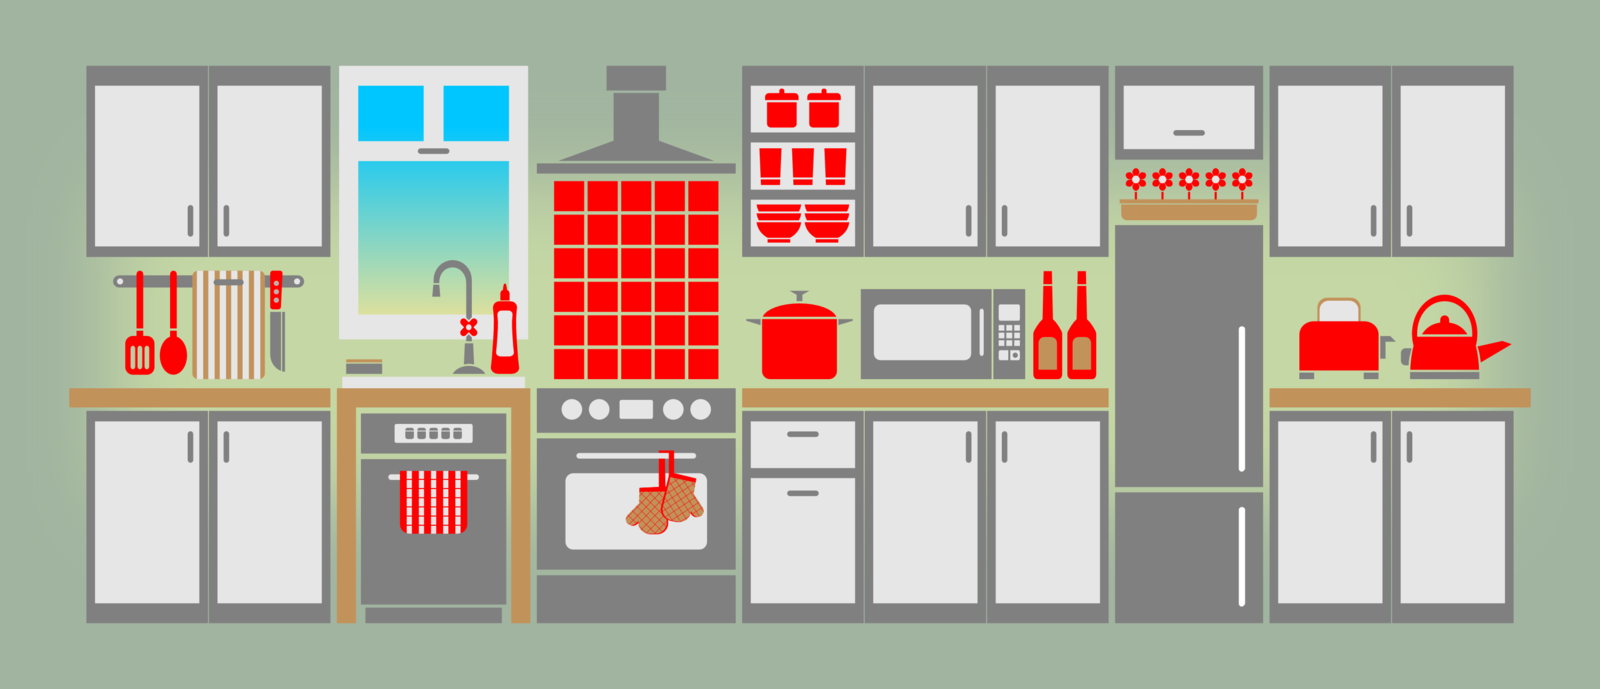 Simple kitchen by viscious speed on deviantart clip art